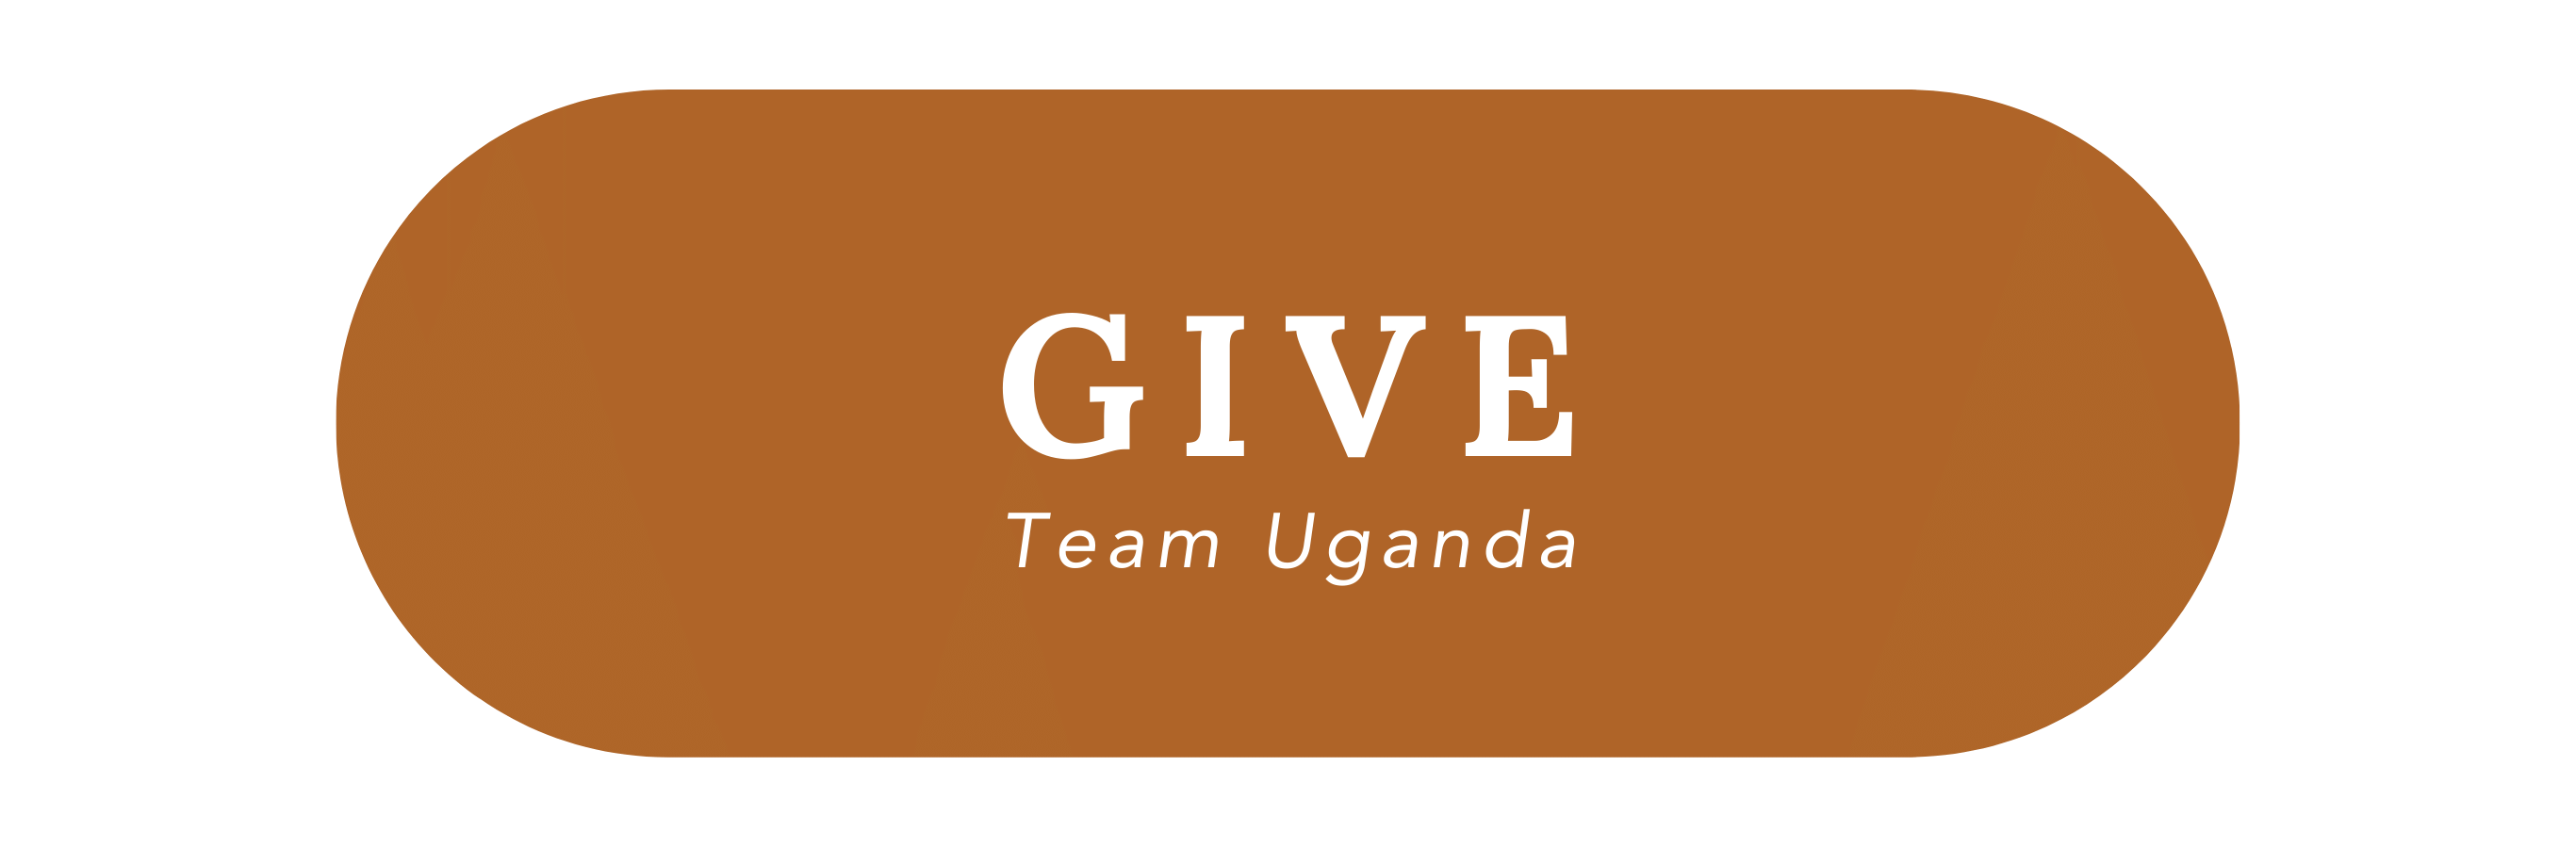 240517 Team Uganda - Give Button